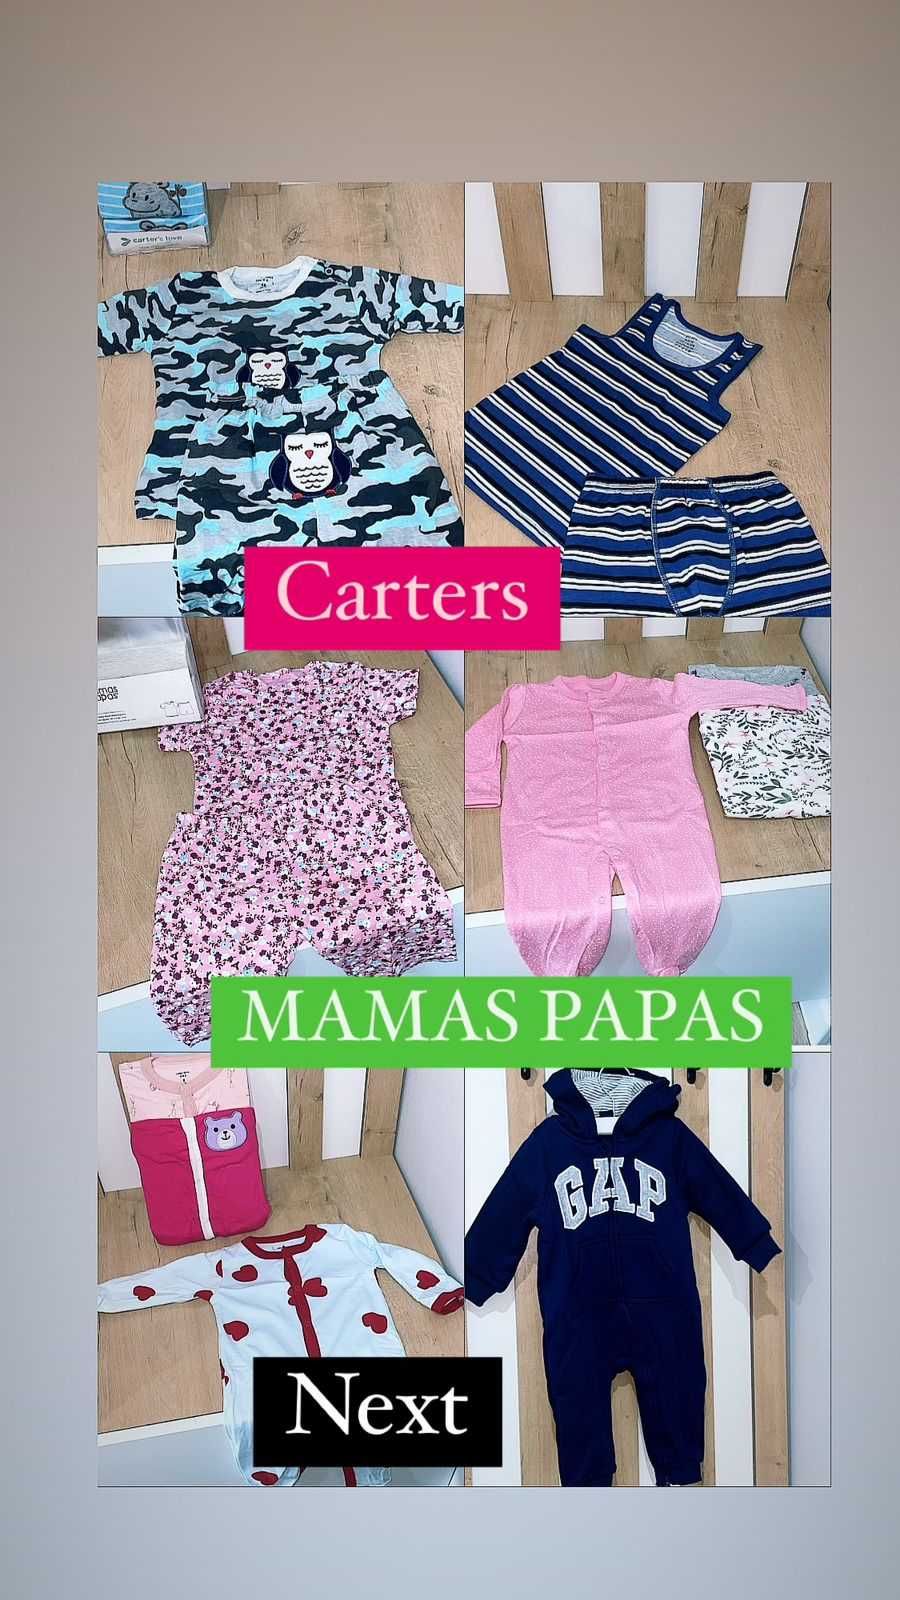 Carters Mamas Papas детская одежда Балалар киім